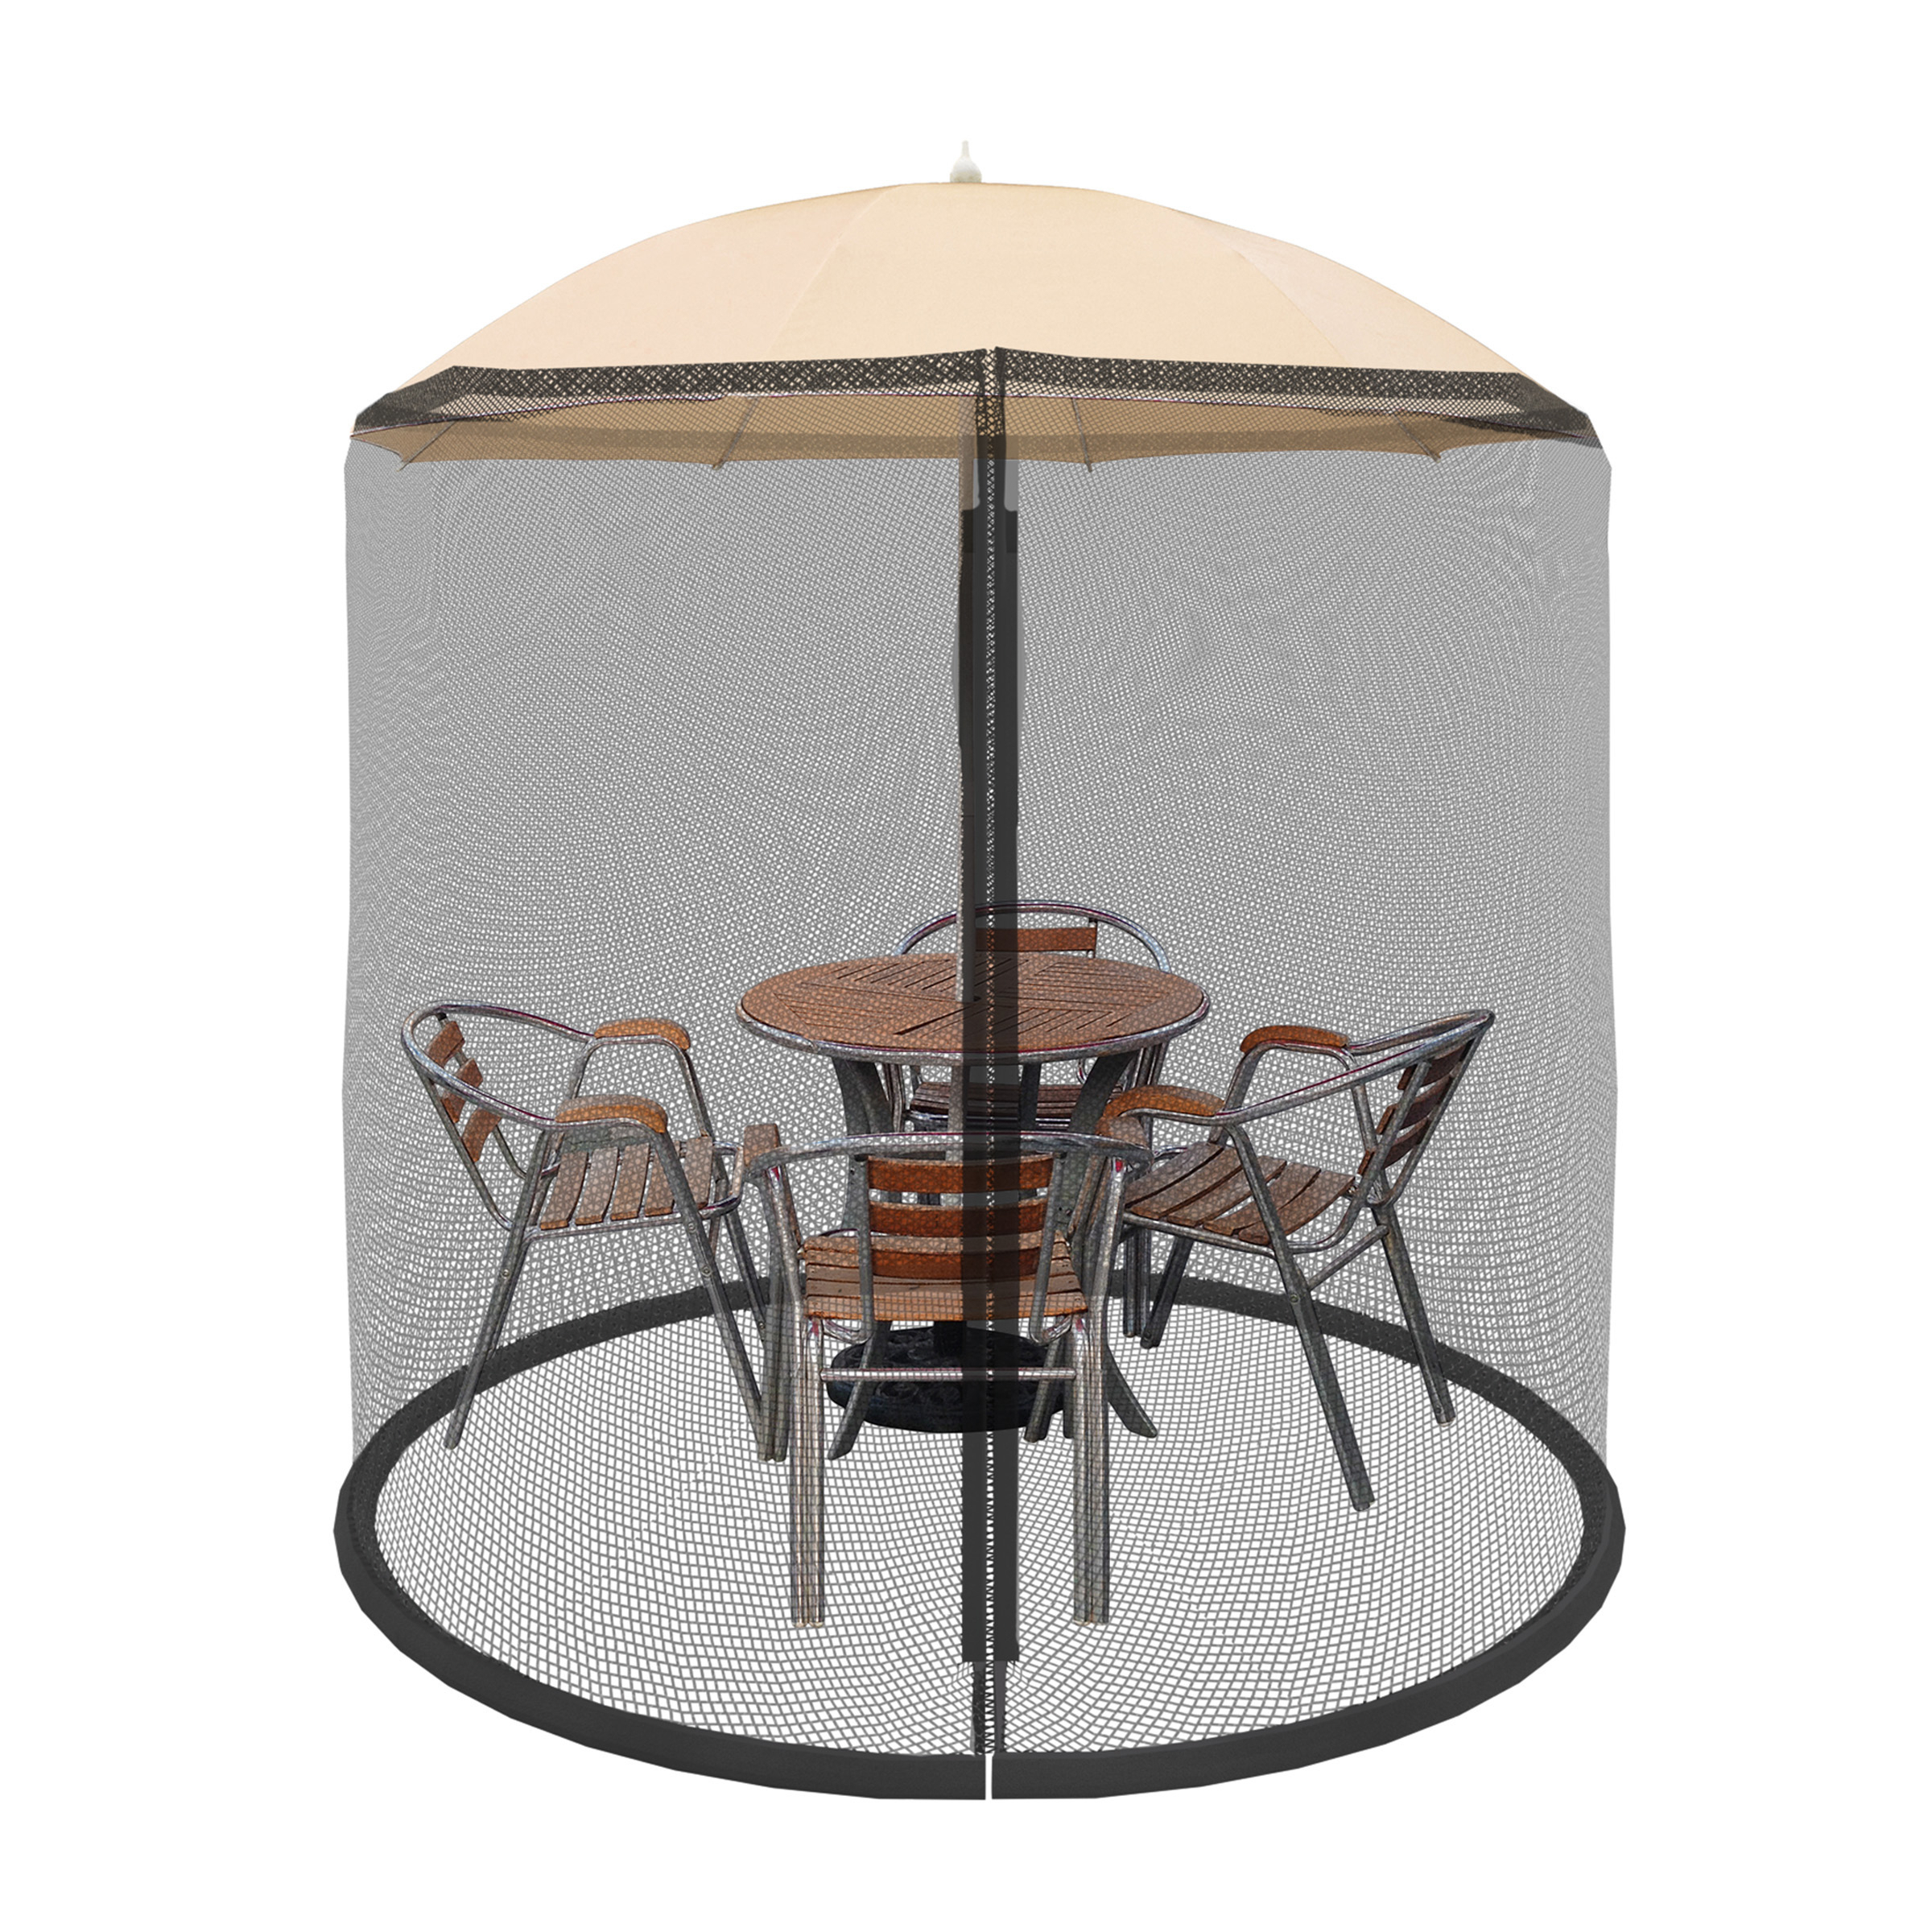 Patio Umbrella Mounted Mesh Bug & Mosquito Screen, Fits 7.5 Ft Diameter